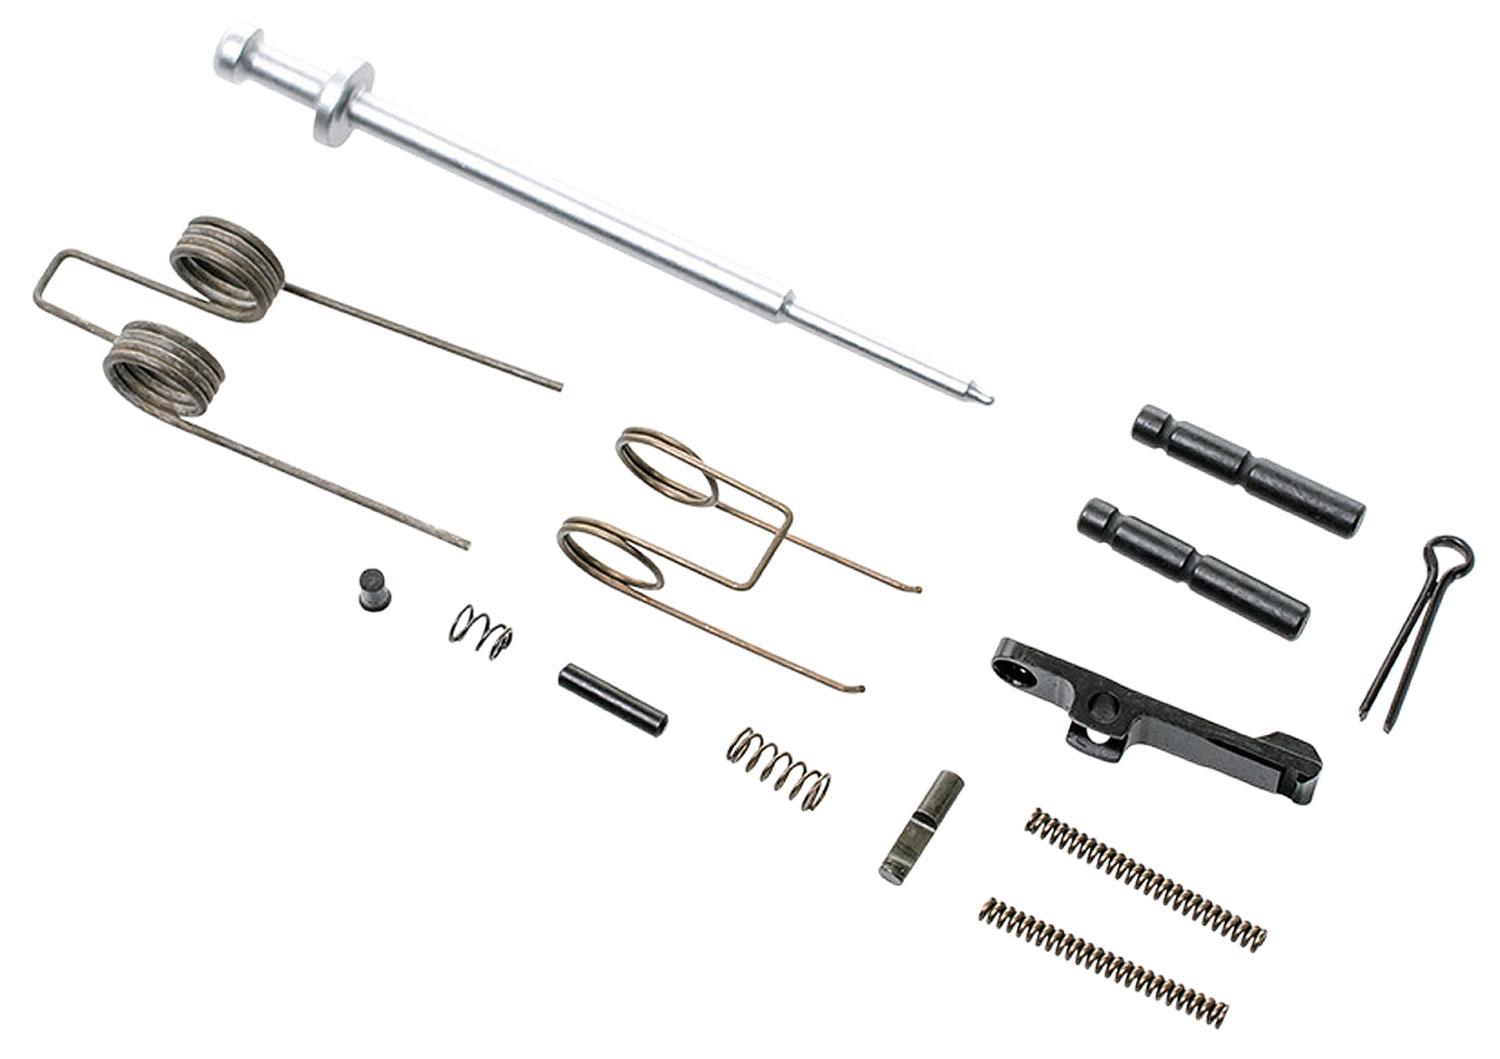  Cmmg Ar- 15 Parts Kit Field Repair